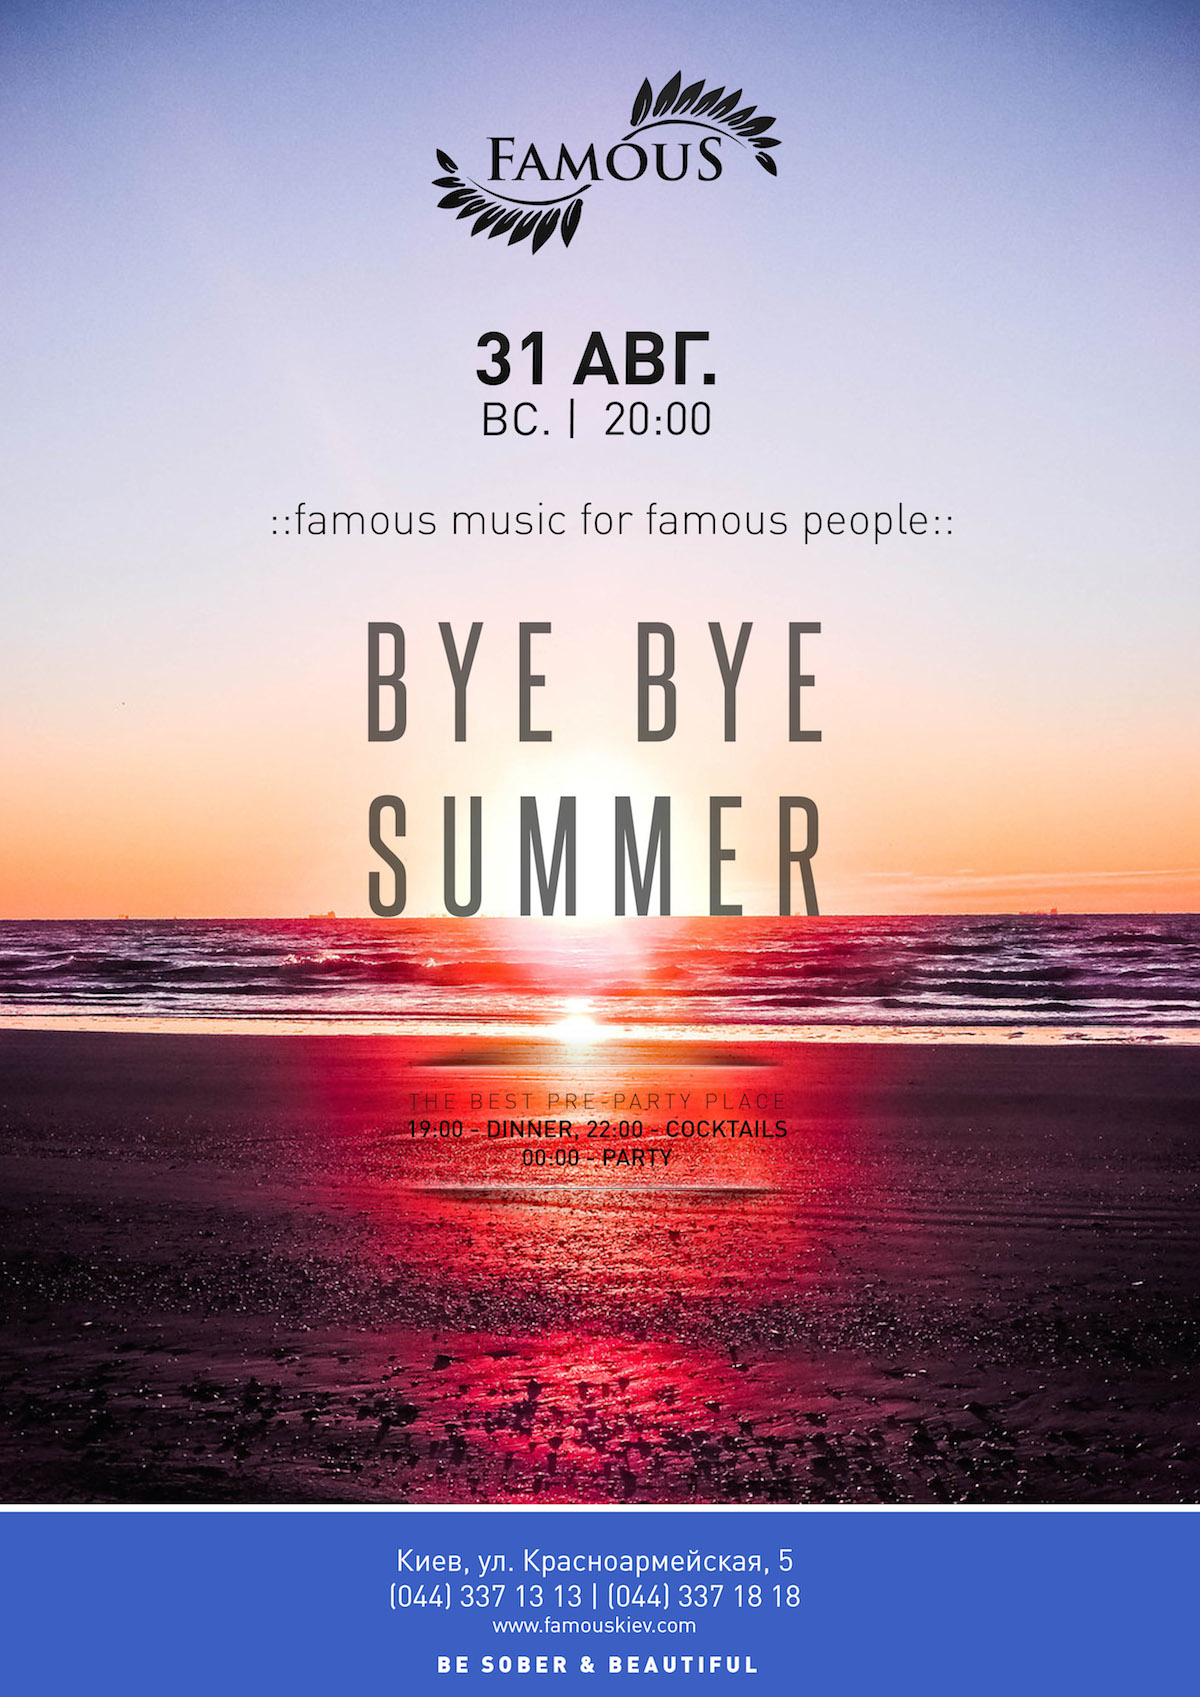 Bye Bye Summer